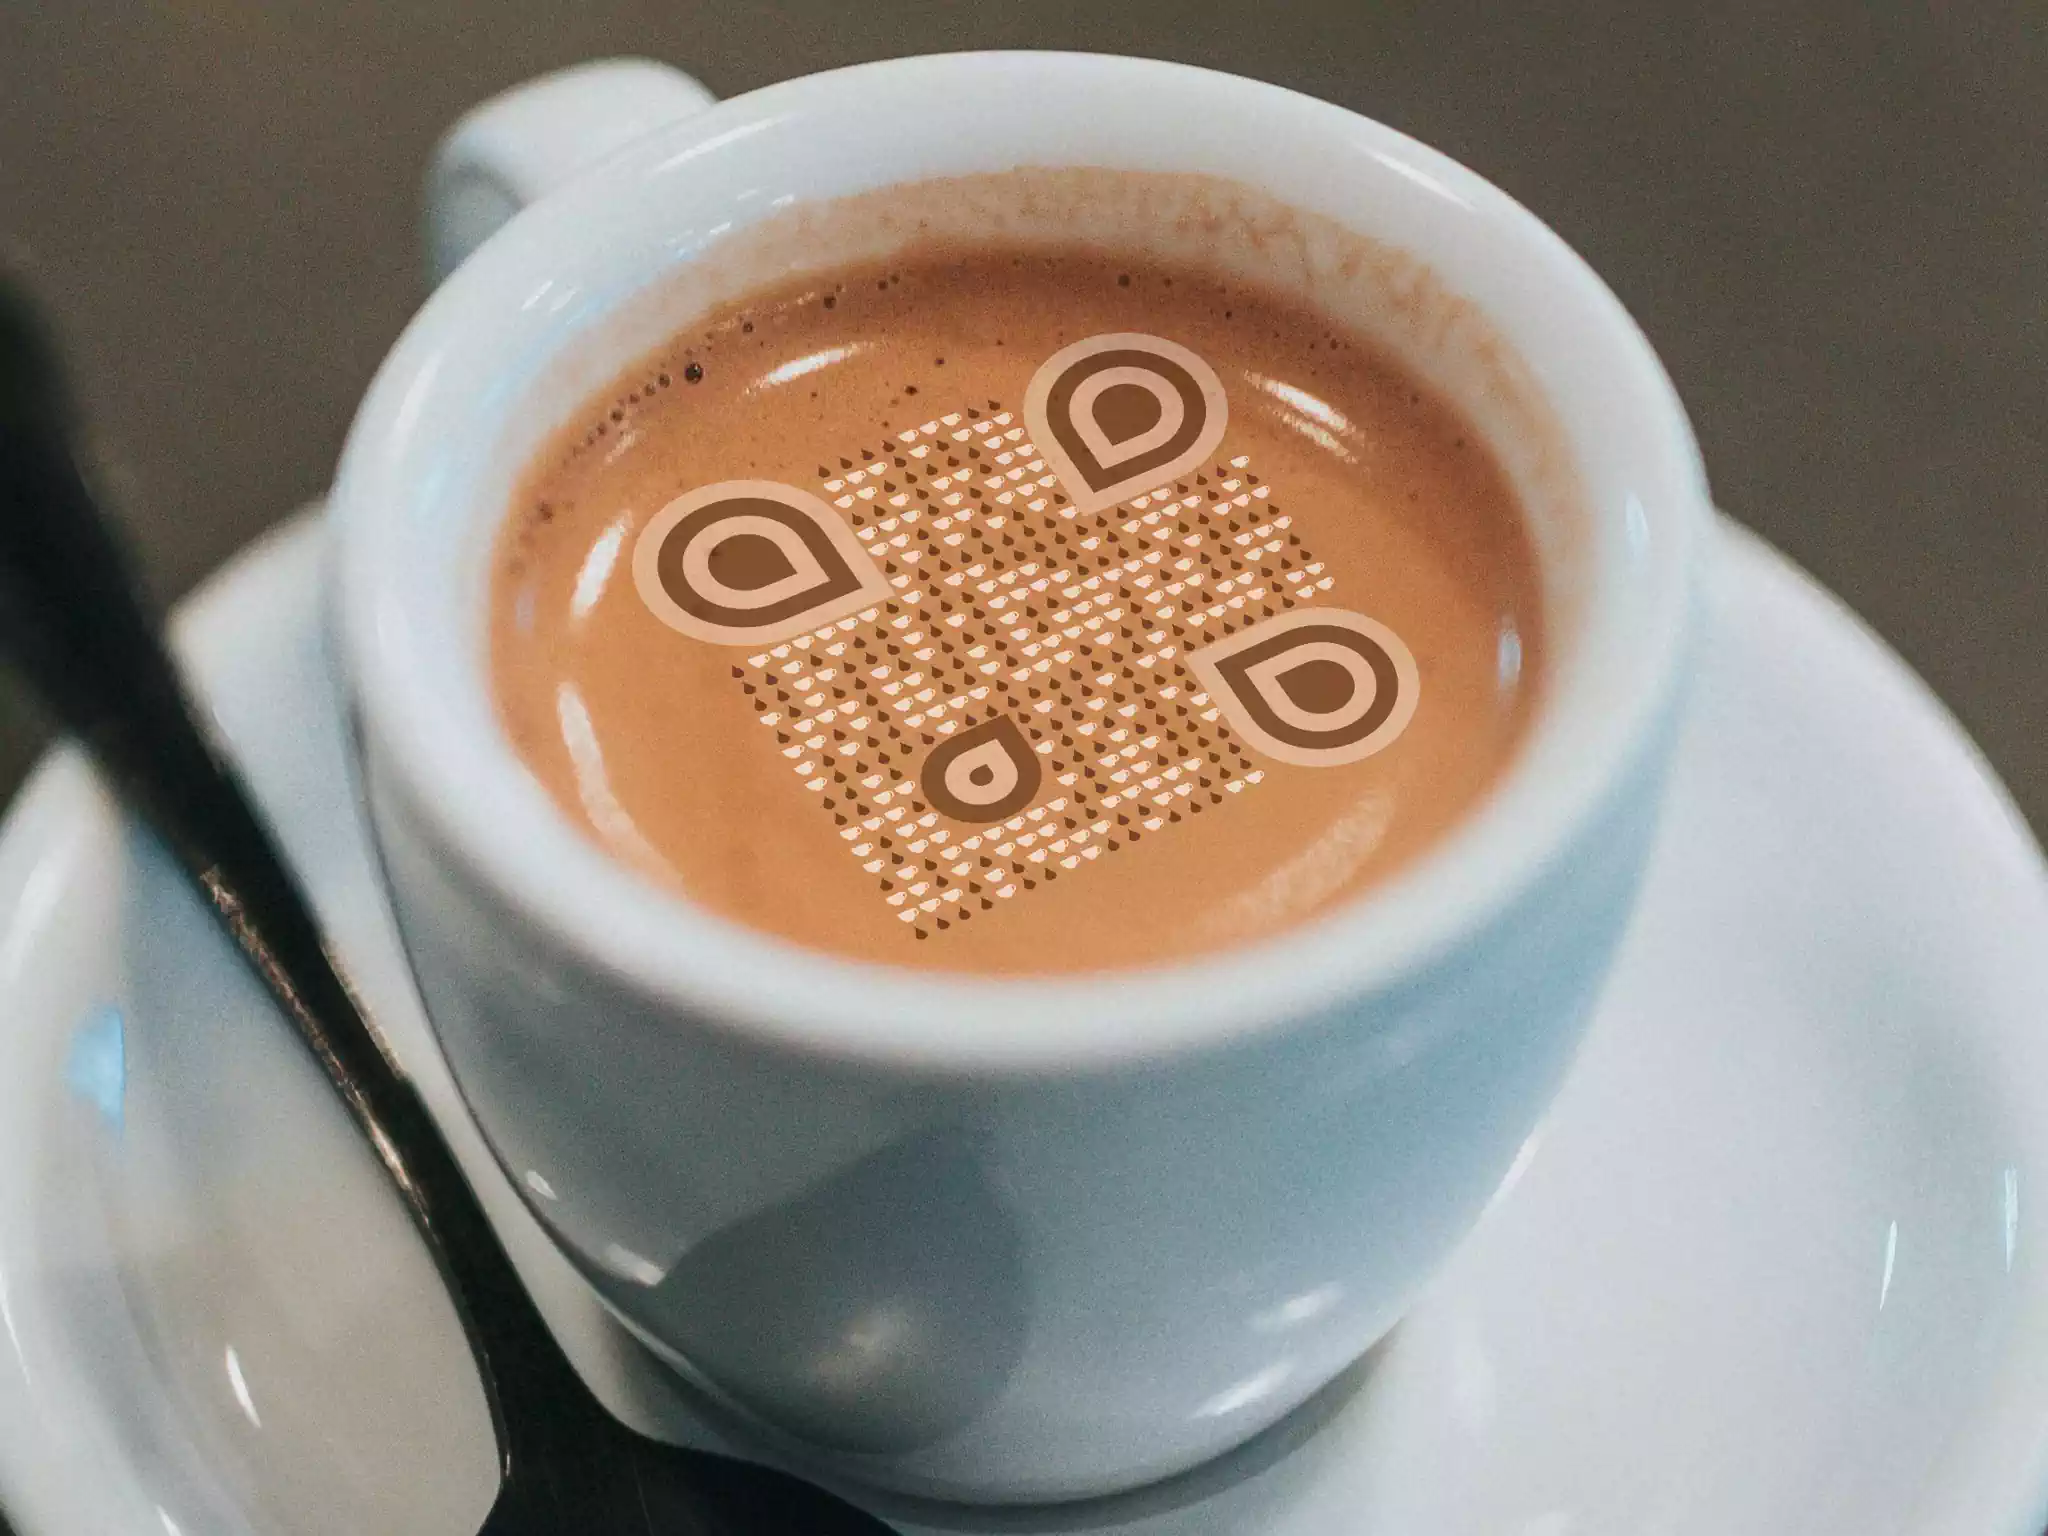 QrcodeLab online qr code generator - qr code image editor - qr code like printed on coffee foam